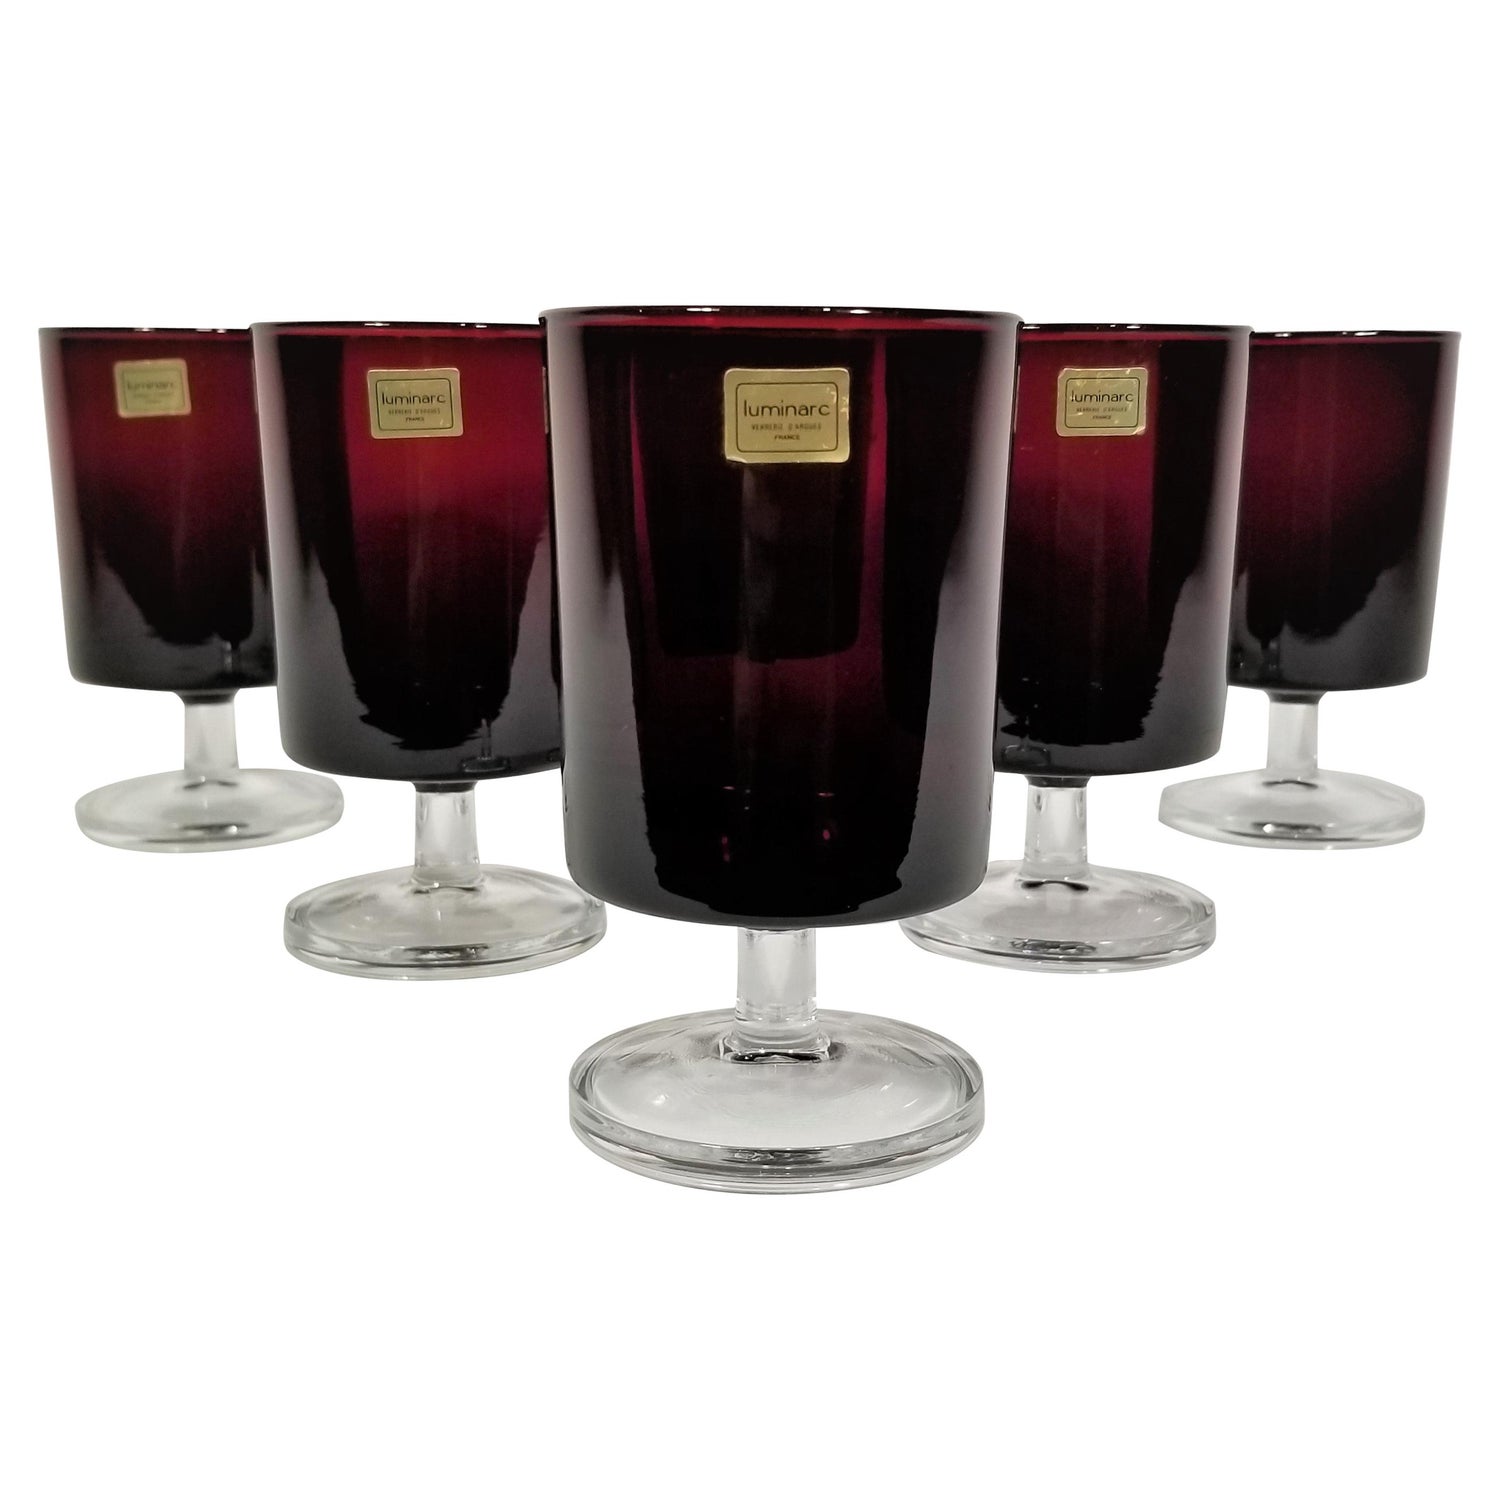 https://a.1stdibscdn.com/luminarc-france-glassware-stemware-mid-century-1960s-set-of-6-for-sale/1121189/f_243263021624958876687/24326302_master.jpg?width=1500